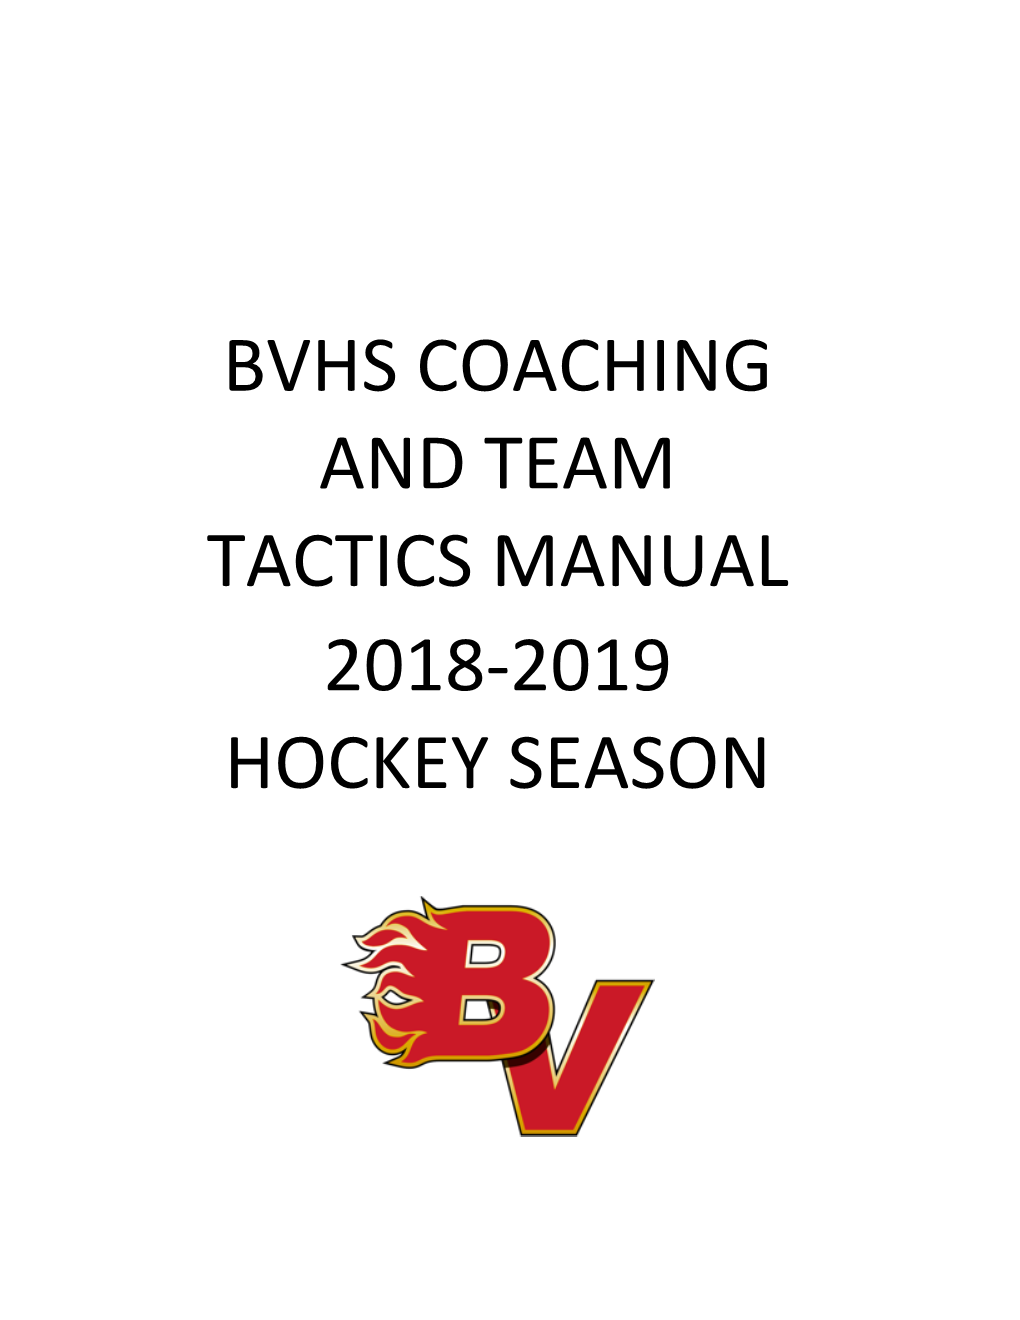 Bvhs Coaching and Team Tactics Manual 2018-2019 Hockey Season